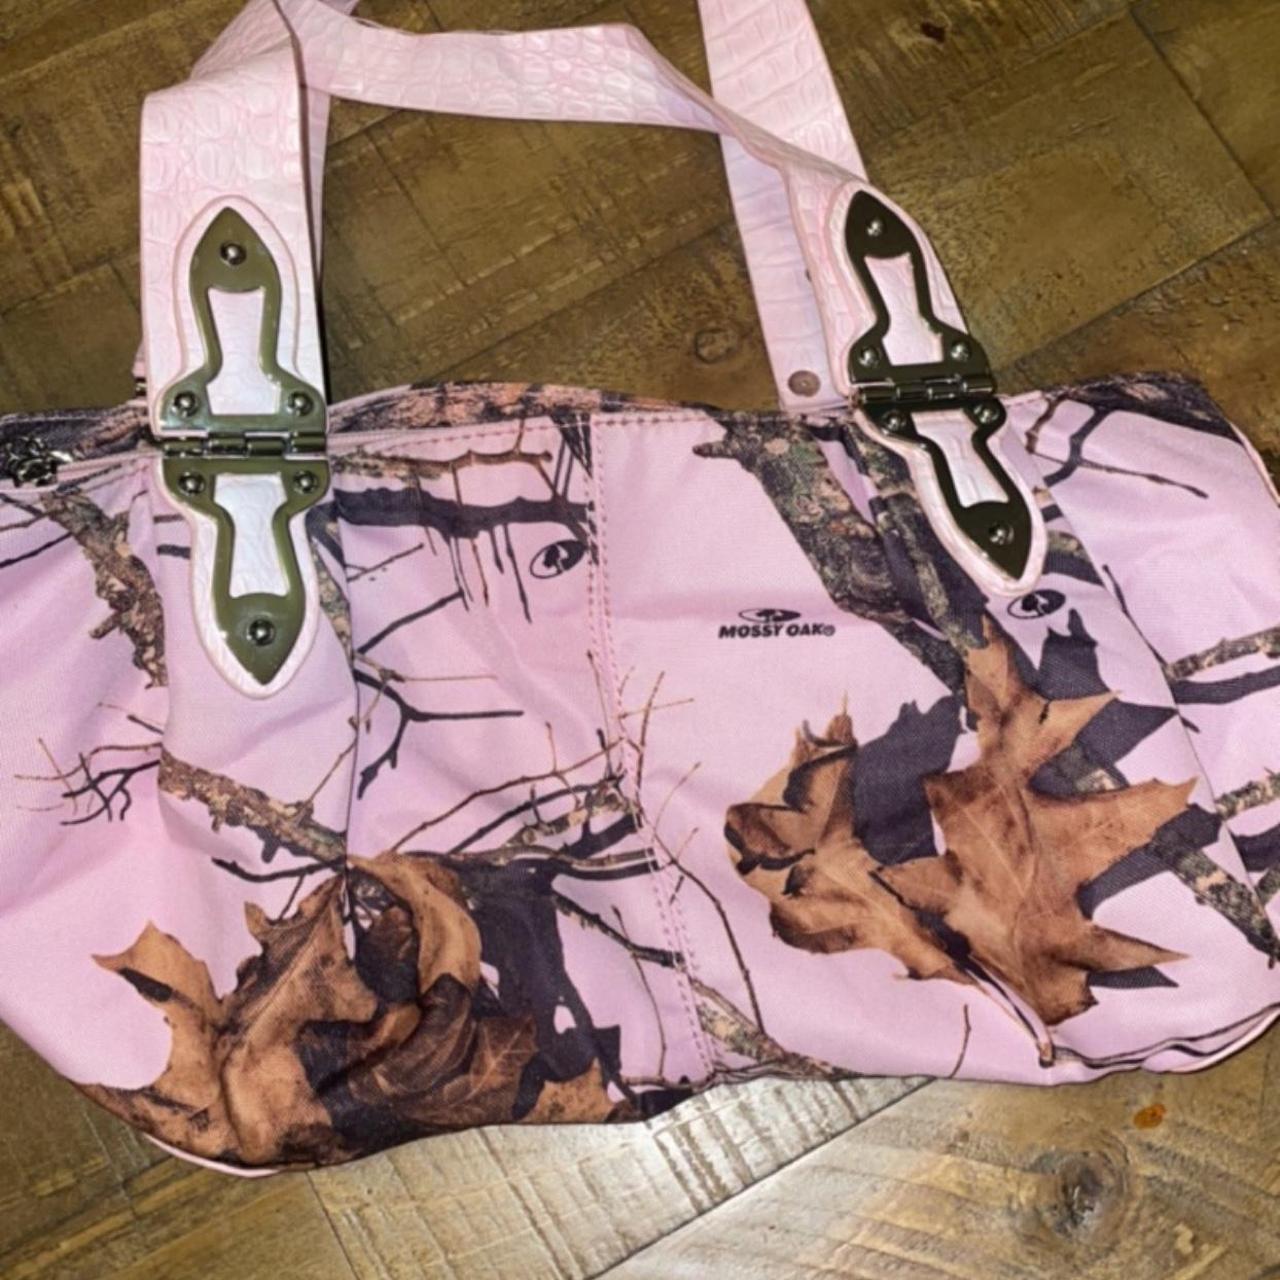 Mossy Oak Camouflage Medium Bags & Handbags for Women for sale | eBay